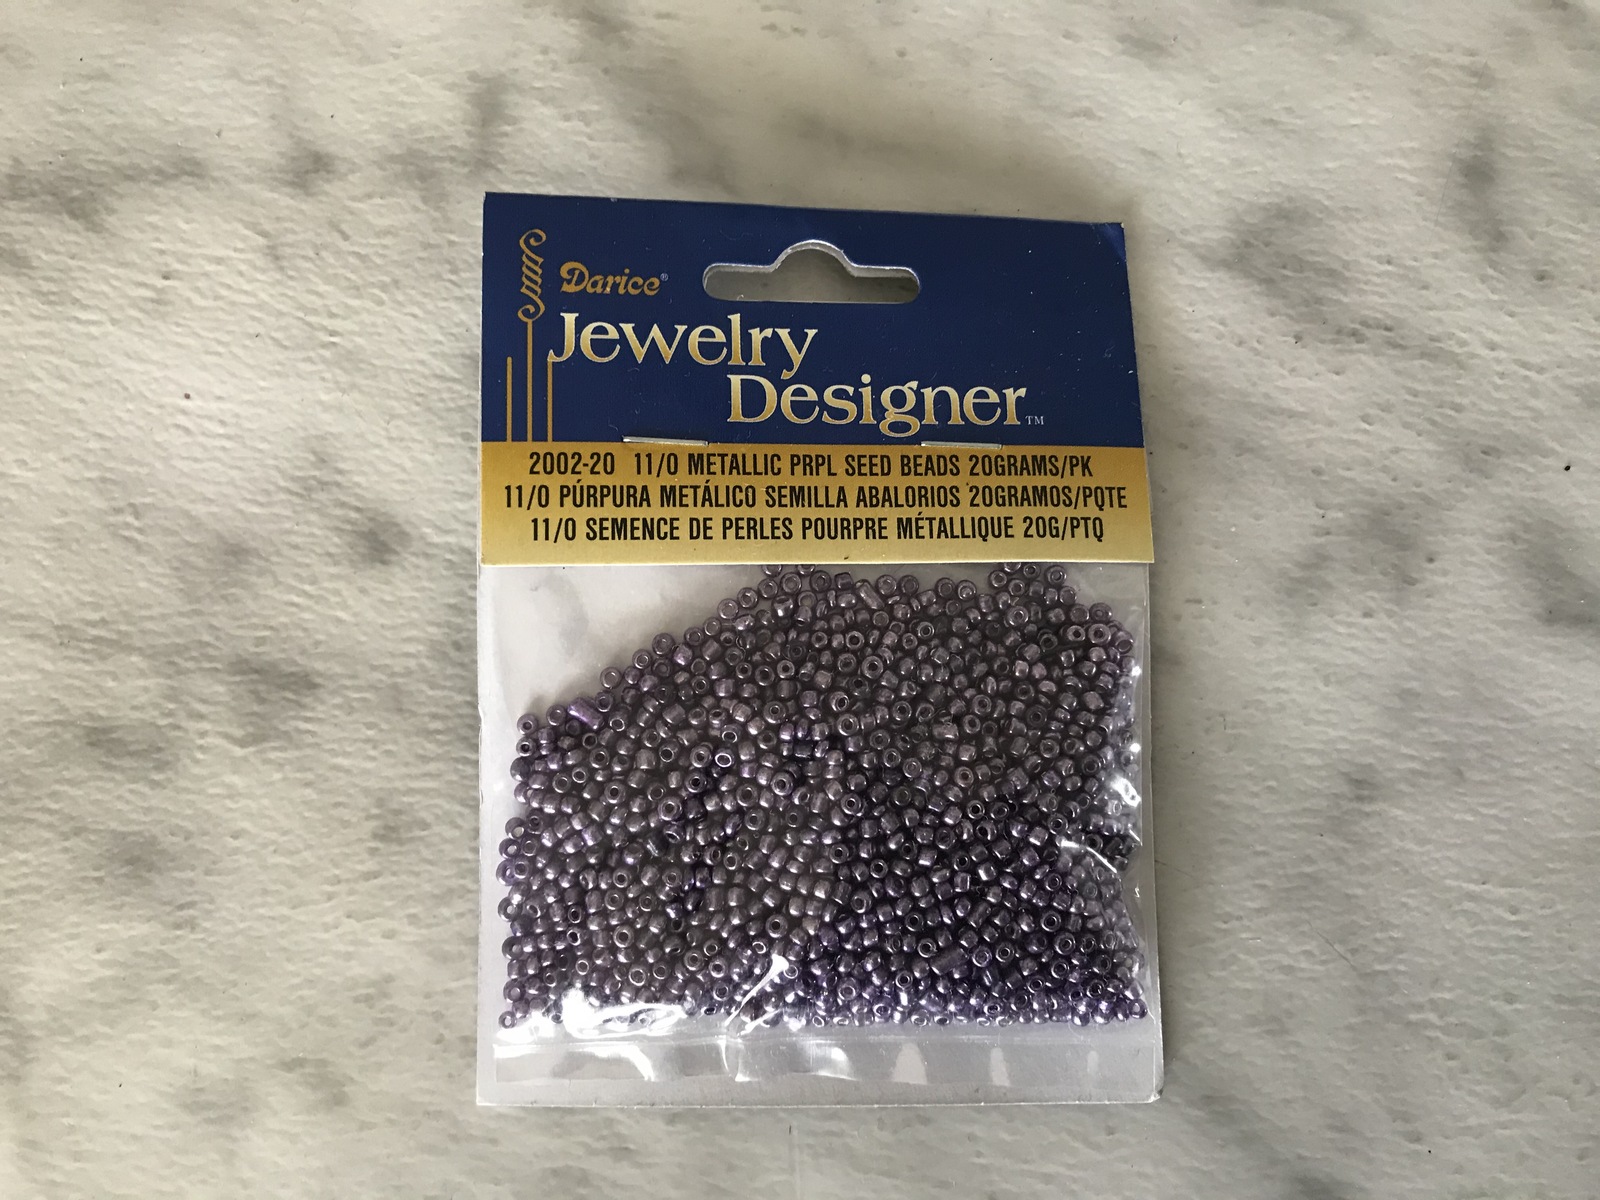 Darice Jewelry Designer Metalic Purple Seed Beads 20 grams (NEW) - $4.07